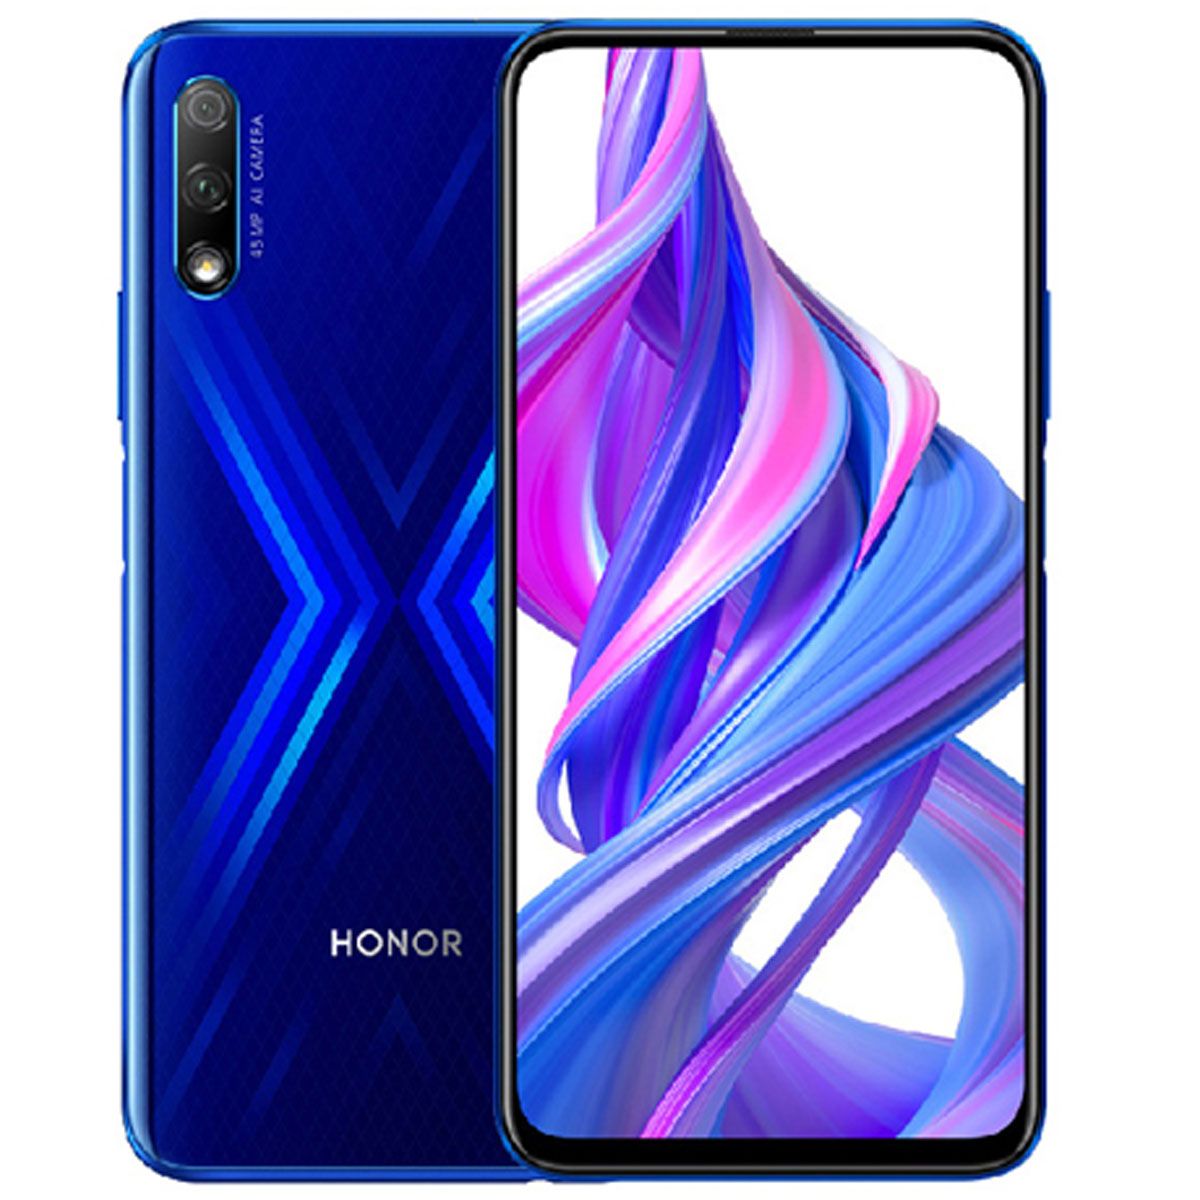 Huawei Honor 9x Price